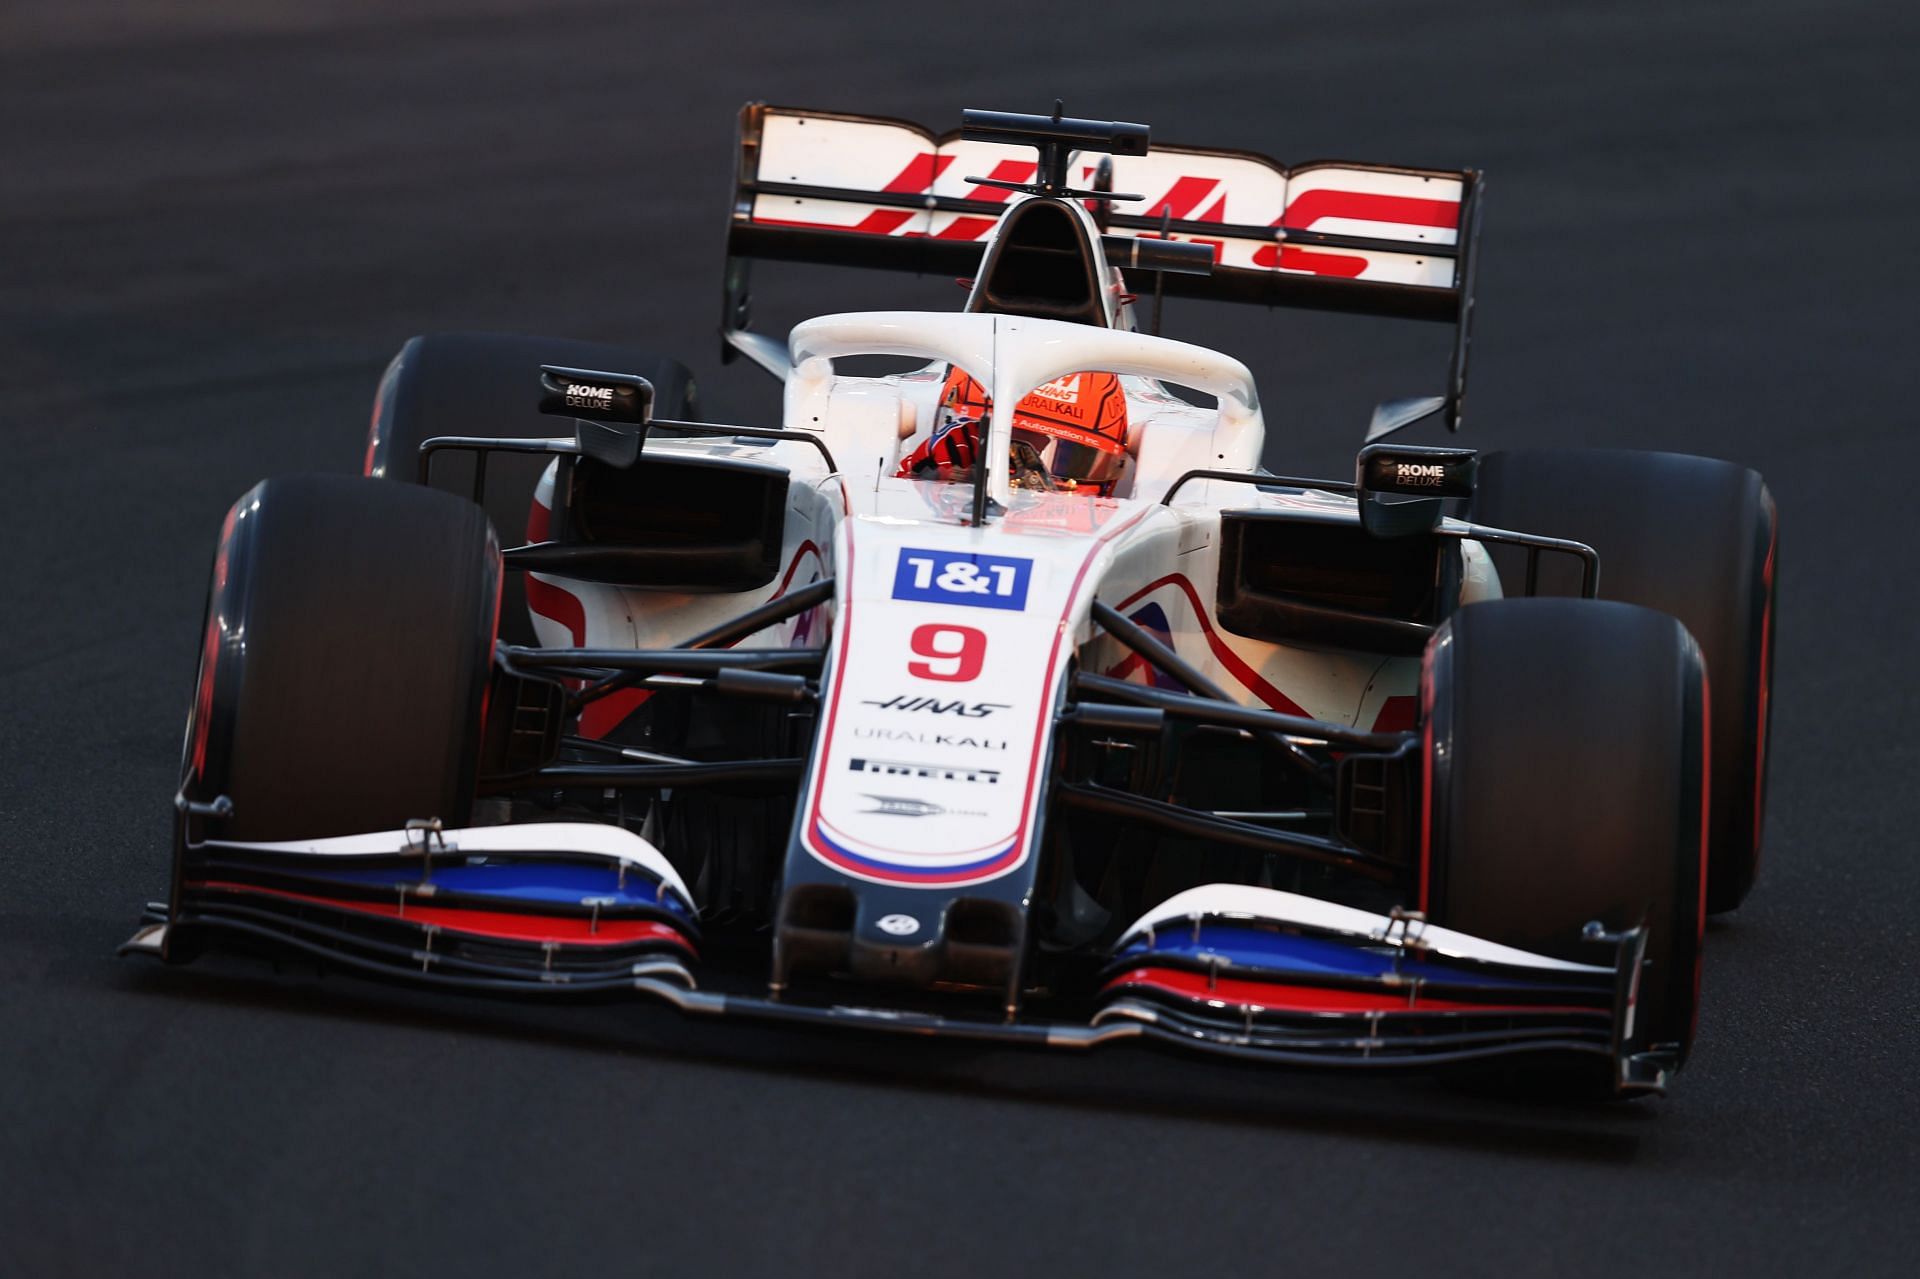 F1 Grand Prix of Saudi Arabia - The Haas of Nikita Mazepin during qualifying on Saturday.